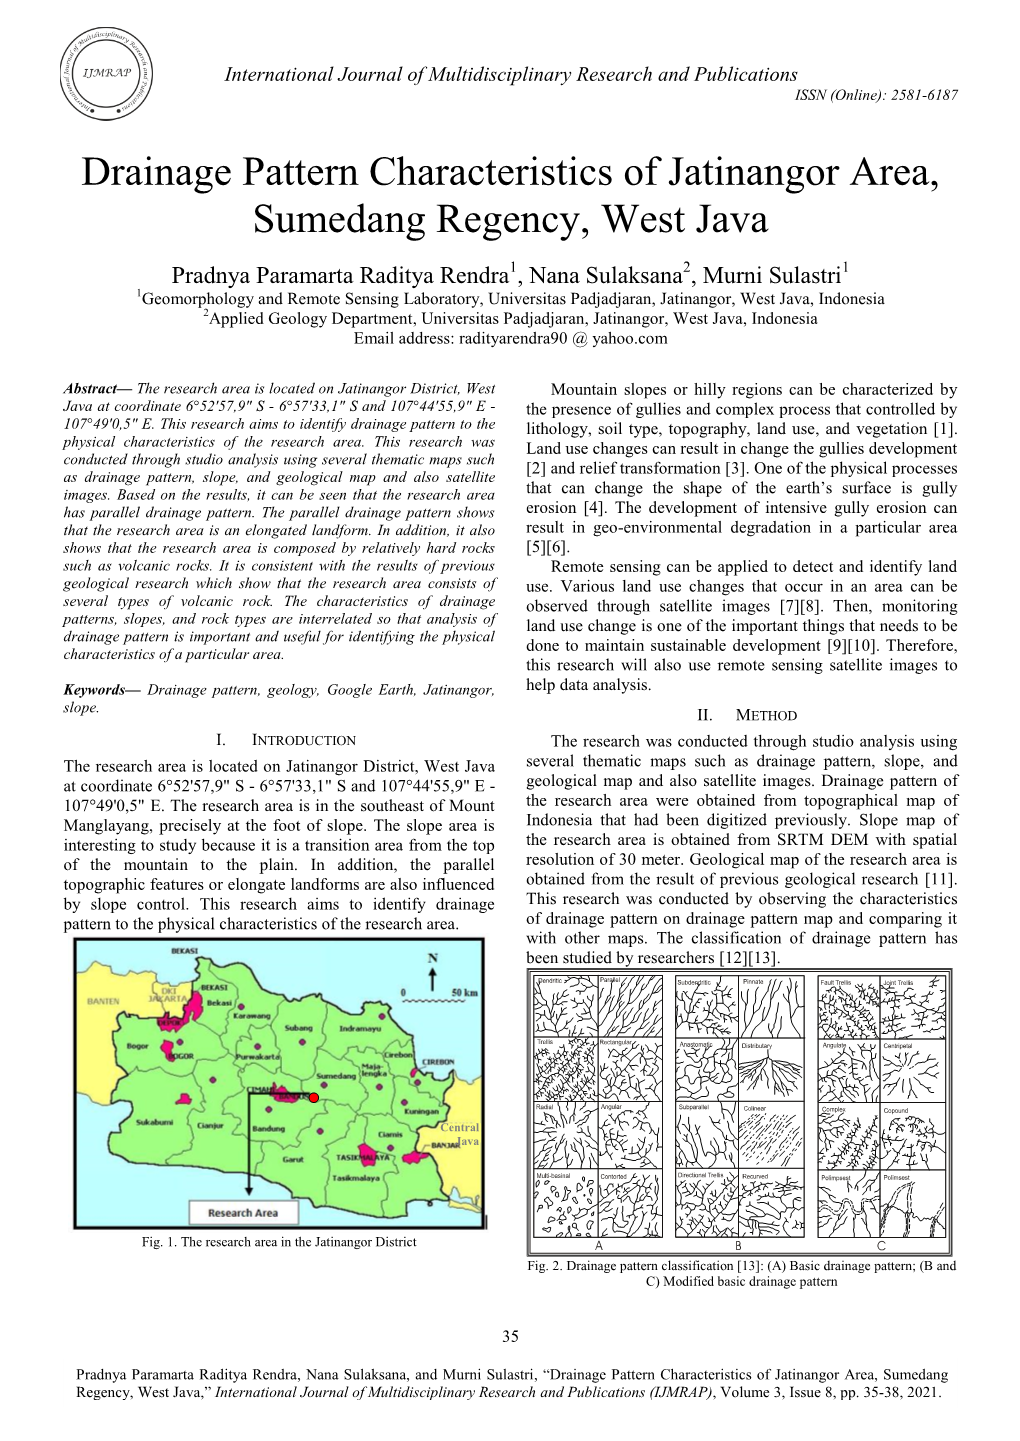 Drainage Pattern Characteristics of Jatinangor Area, Sumedang Regency, West Java